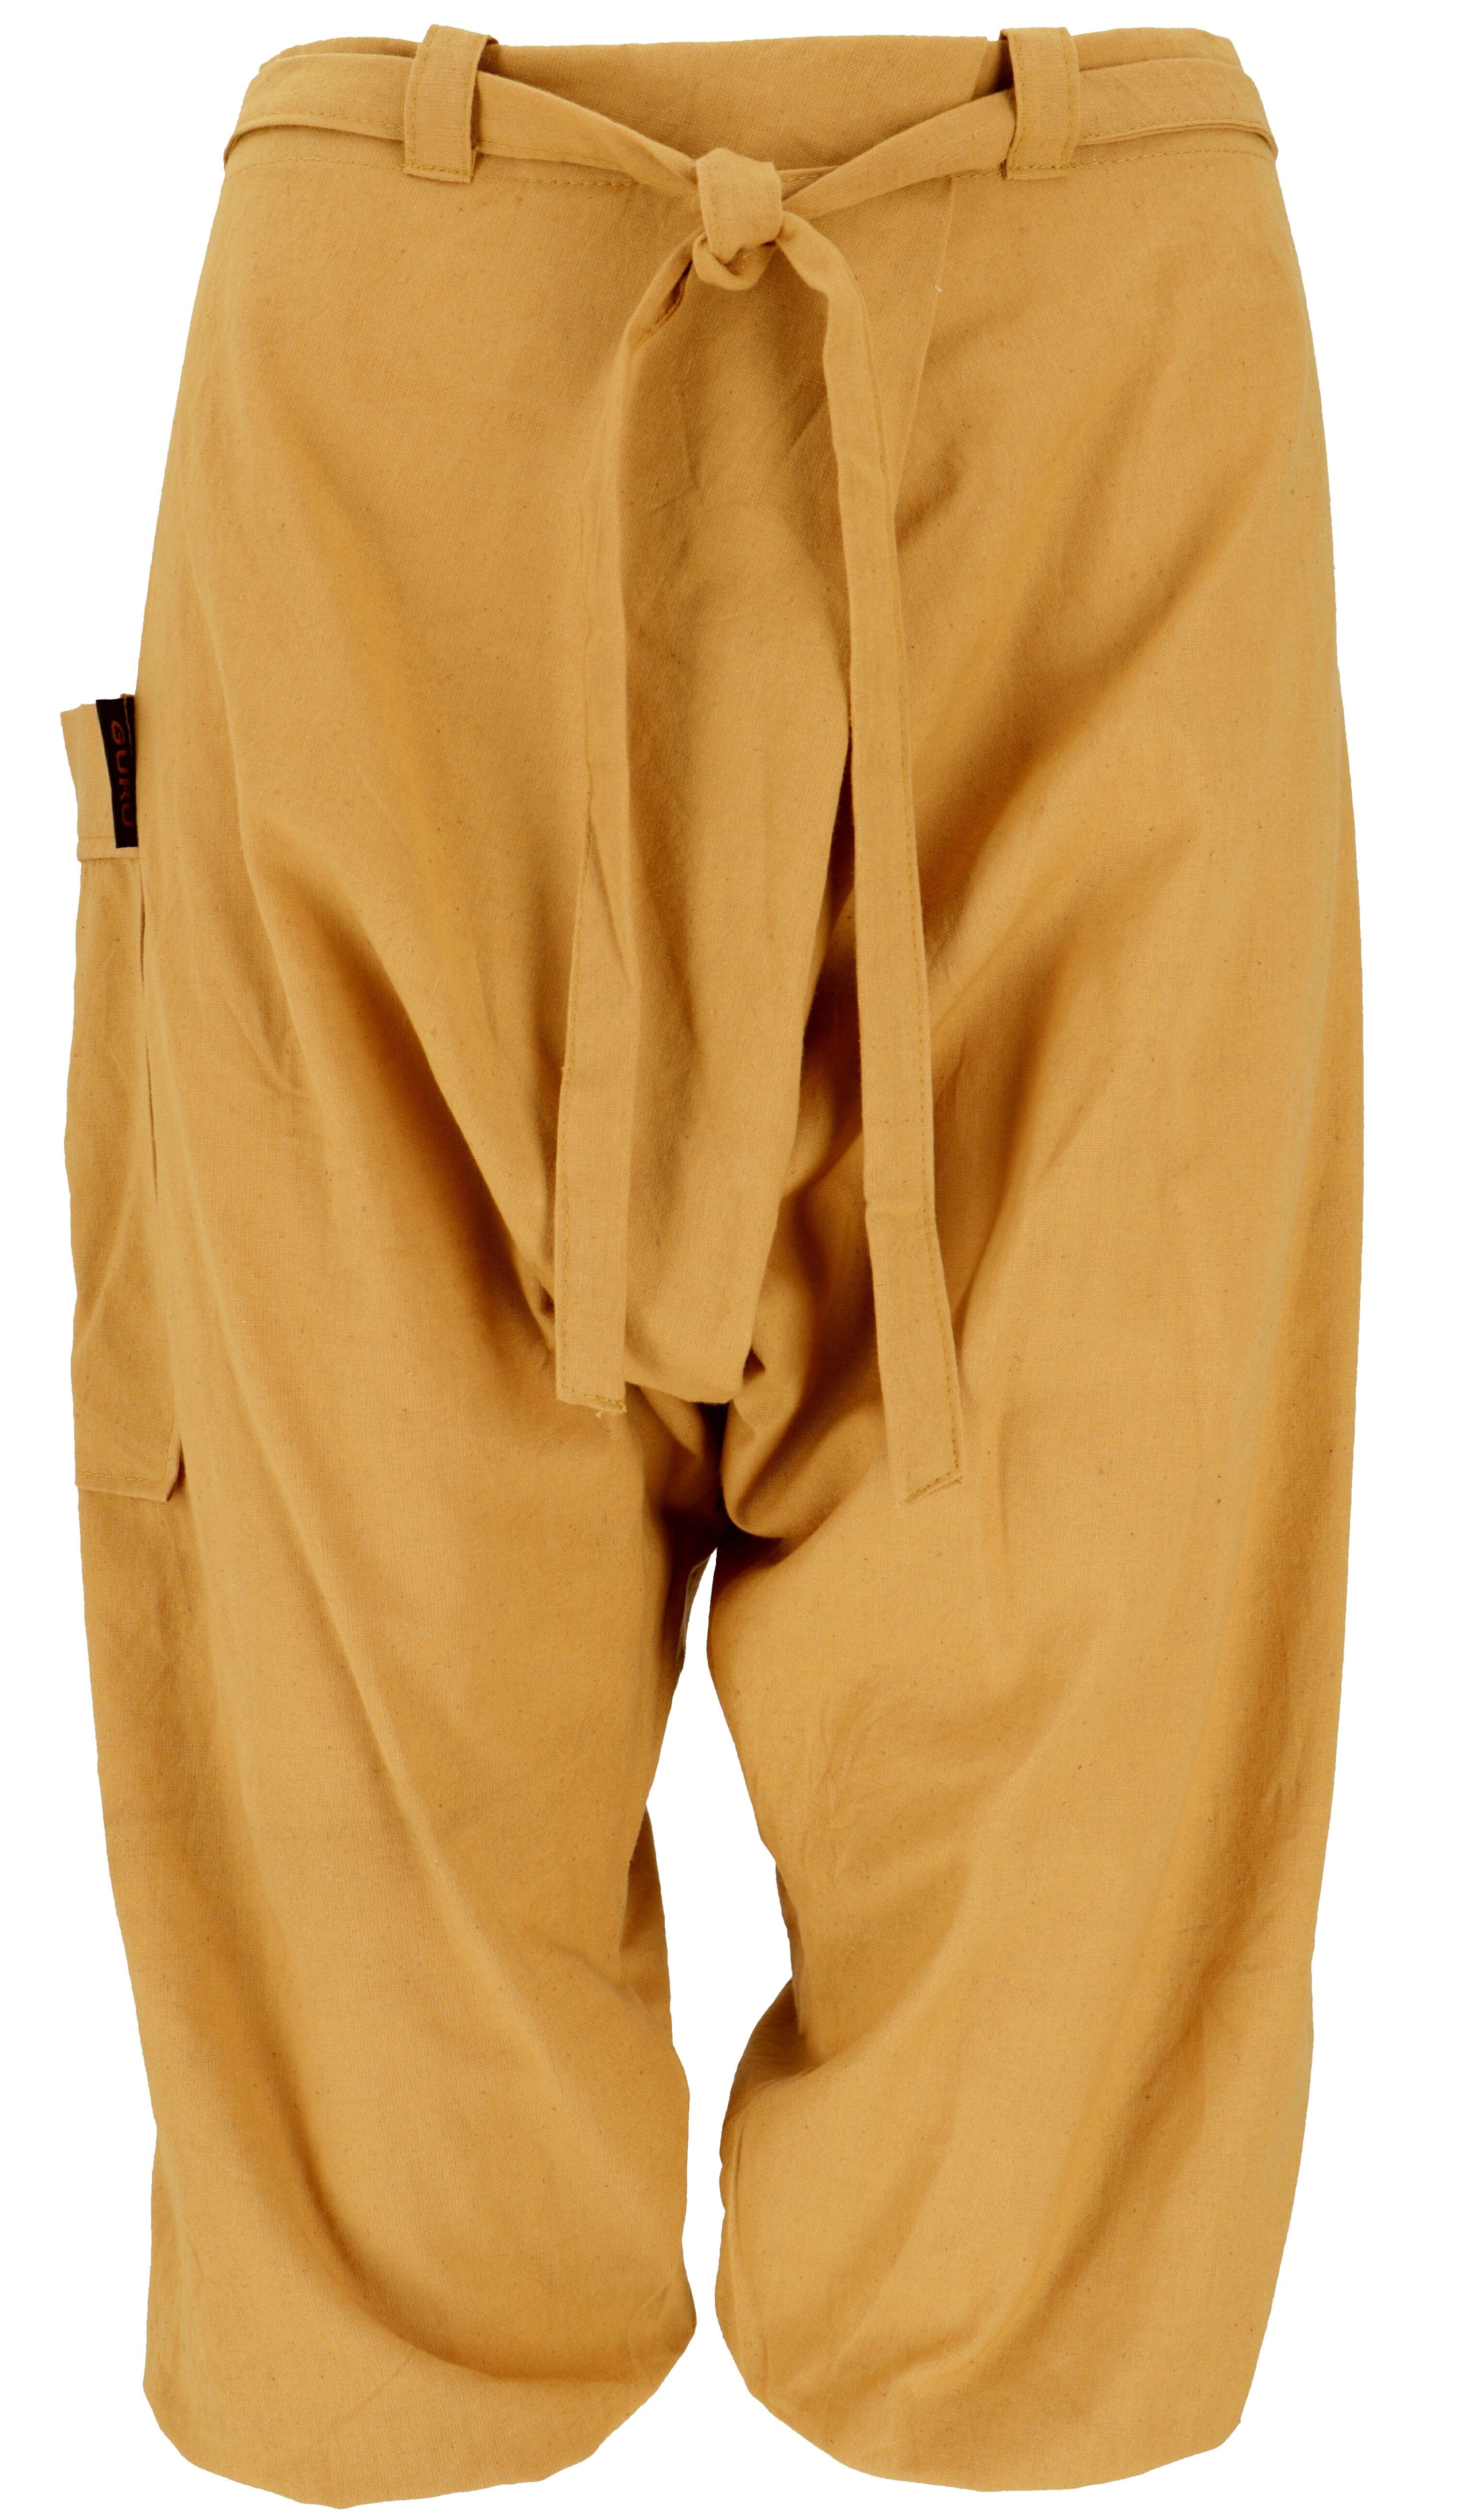 Bekleidung mango Hose Relaxhose Shorts, Ethno Guru-Shop Style, alternative Baggy - Sarouel